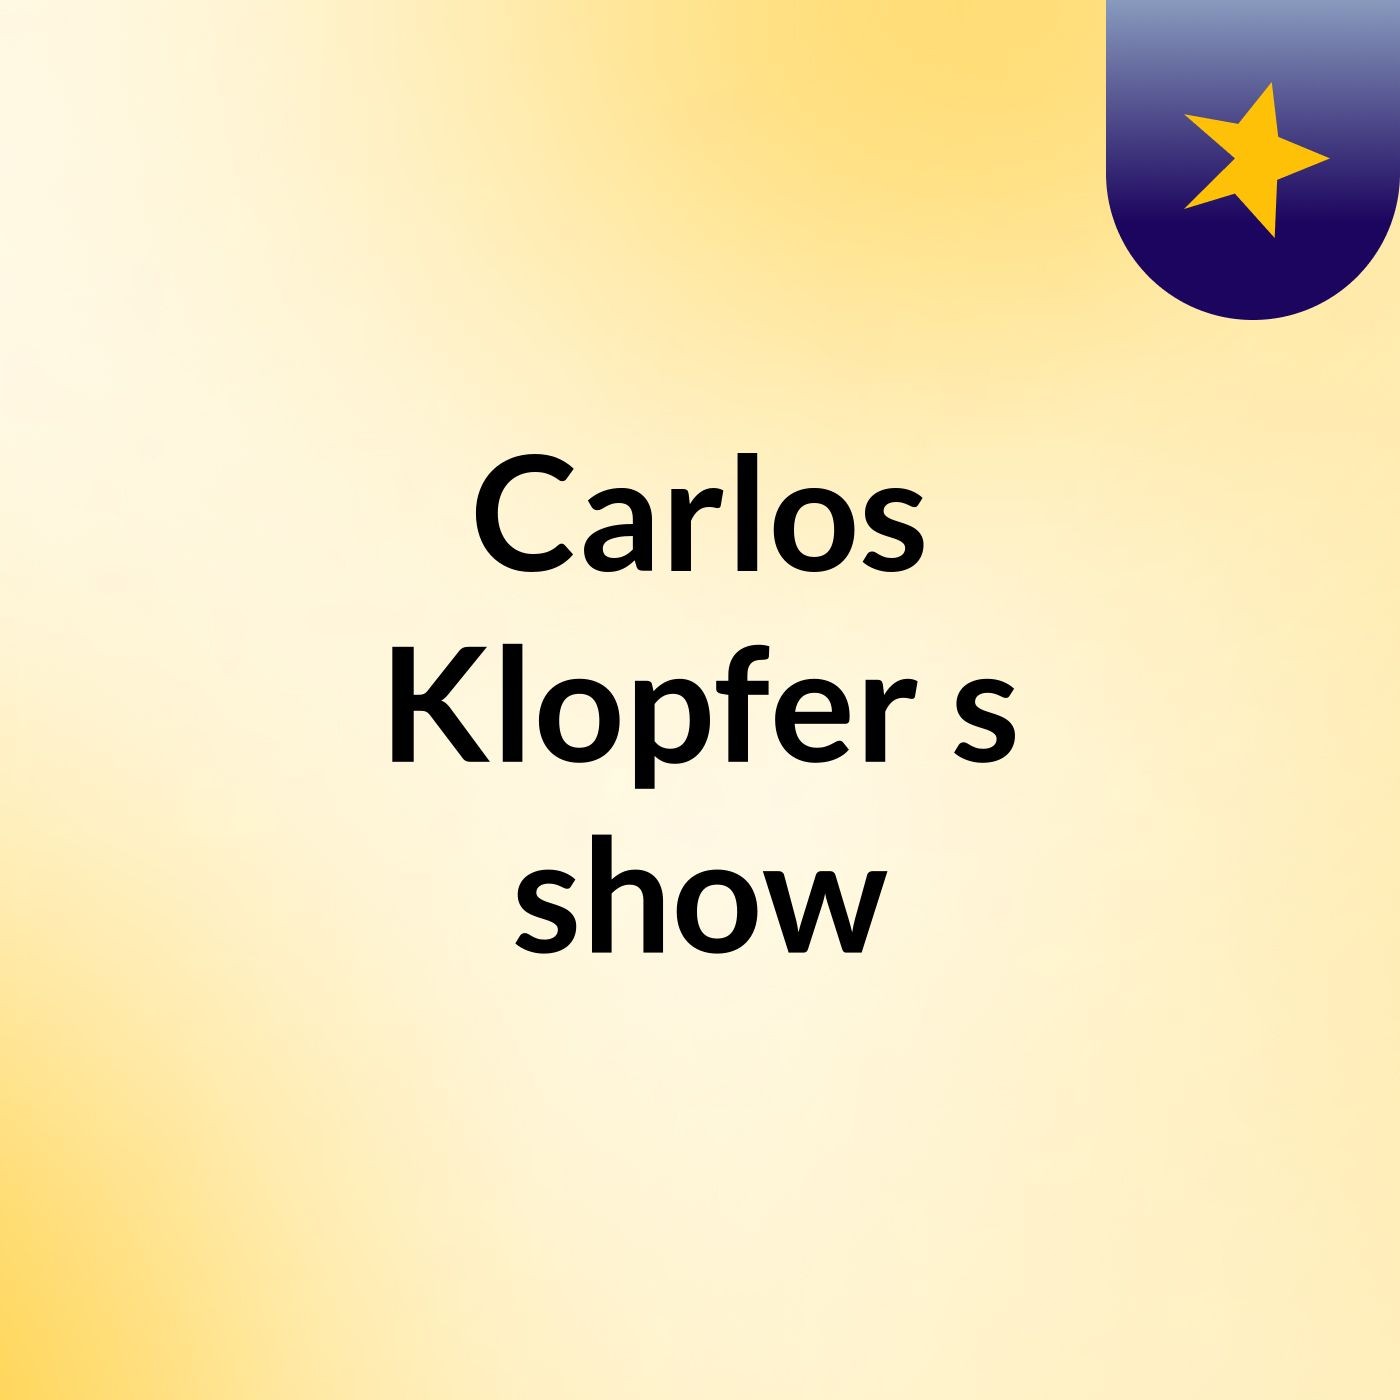 Carlos Klopfer's show